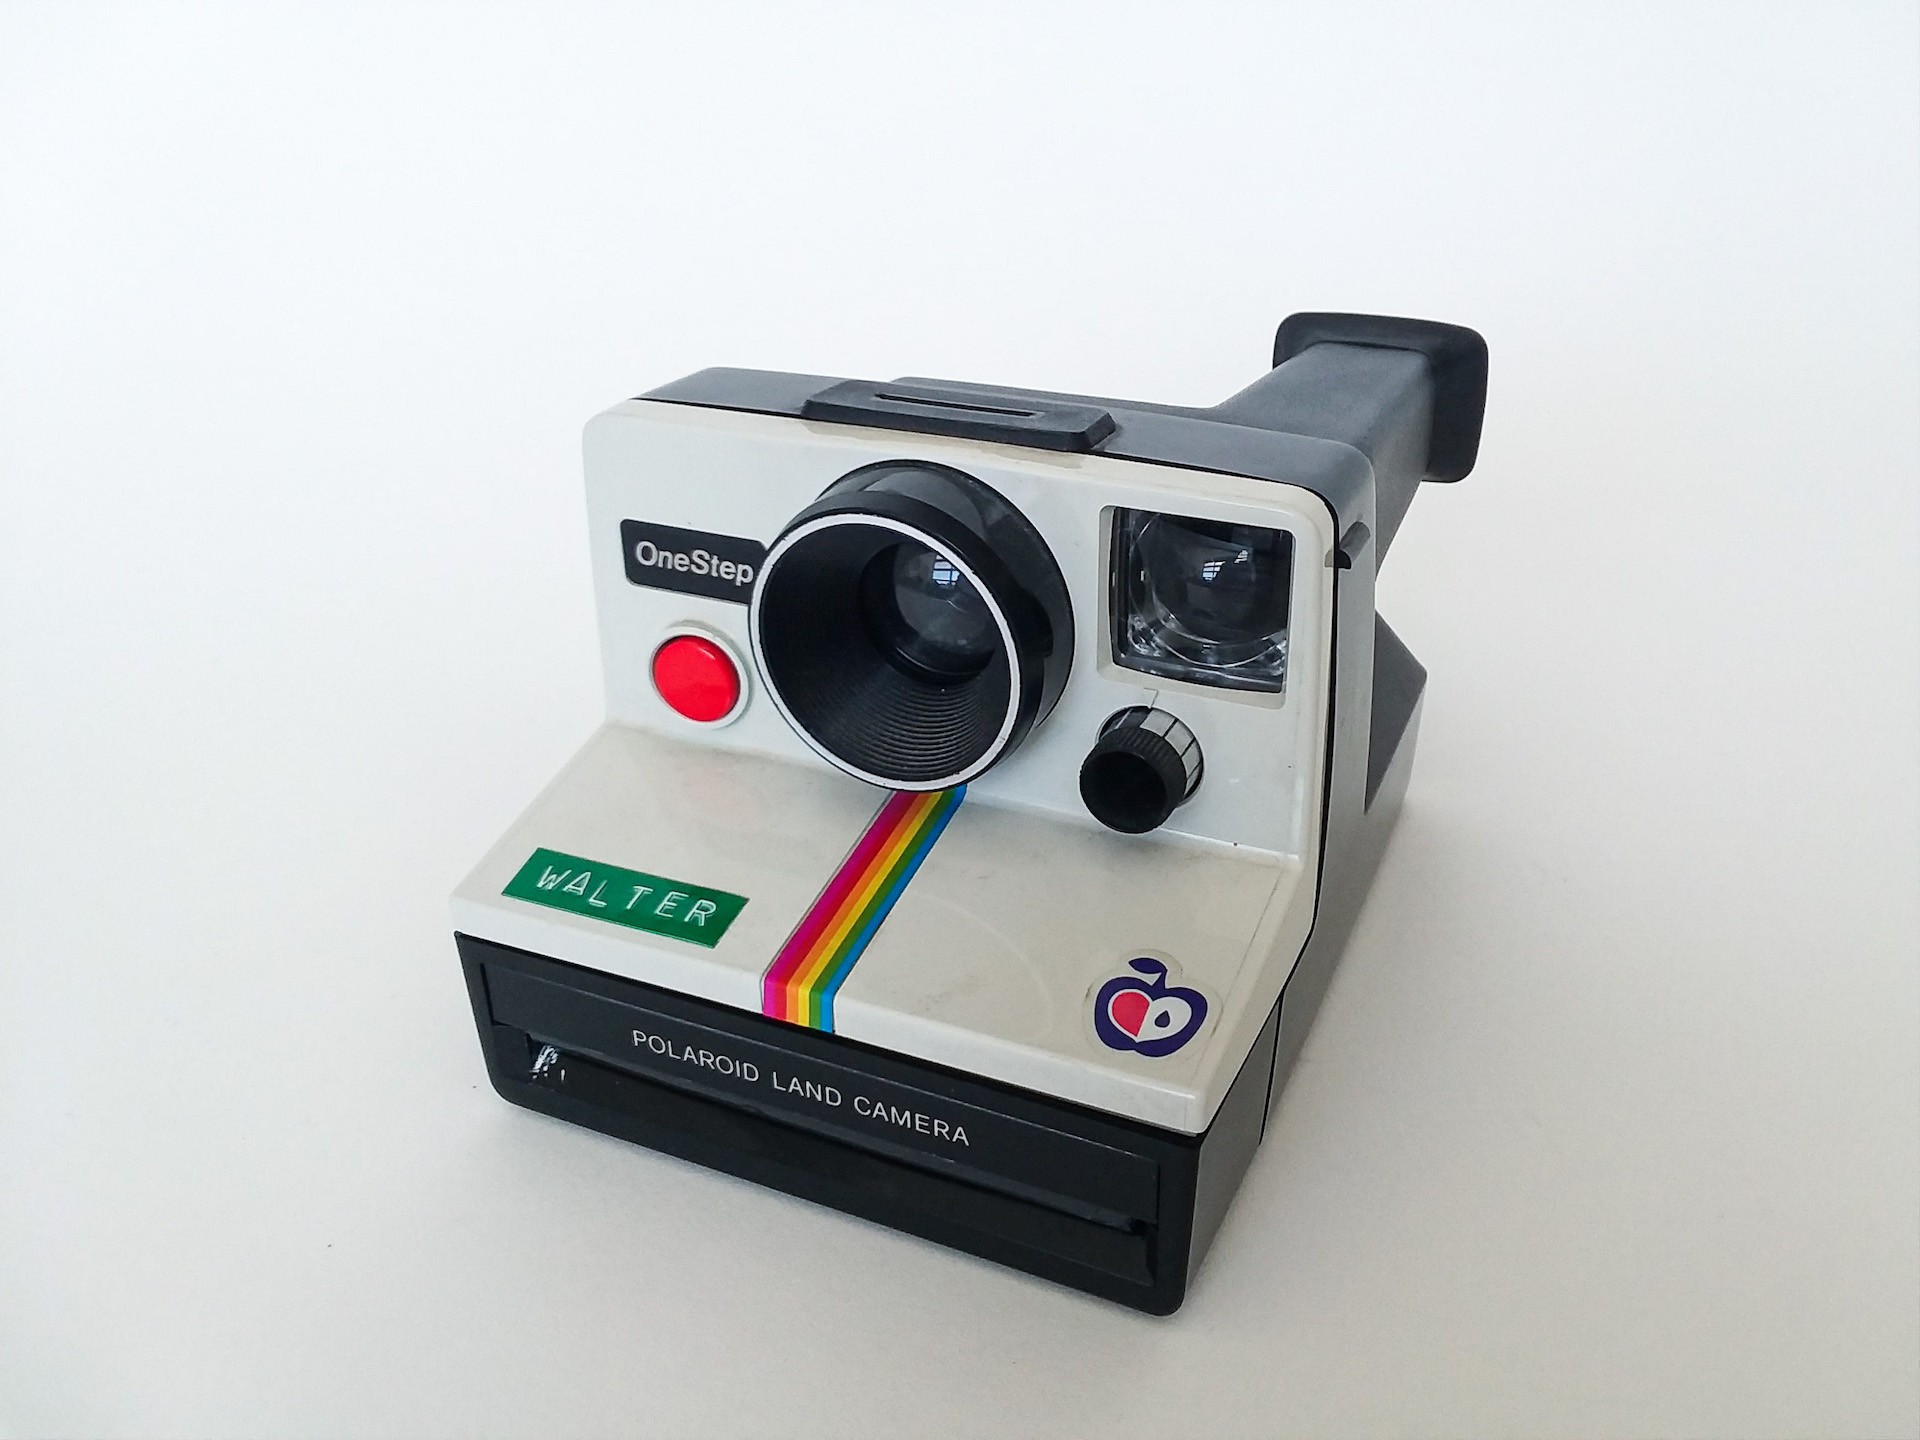 a Polaroid OneStep camera